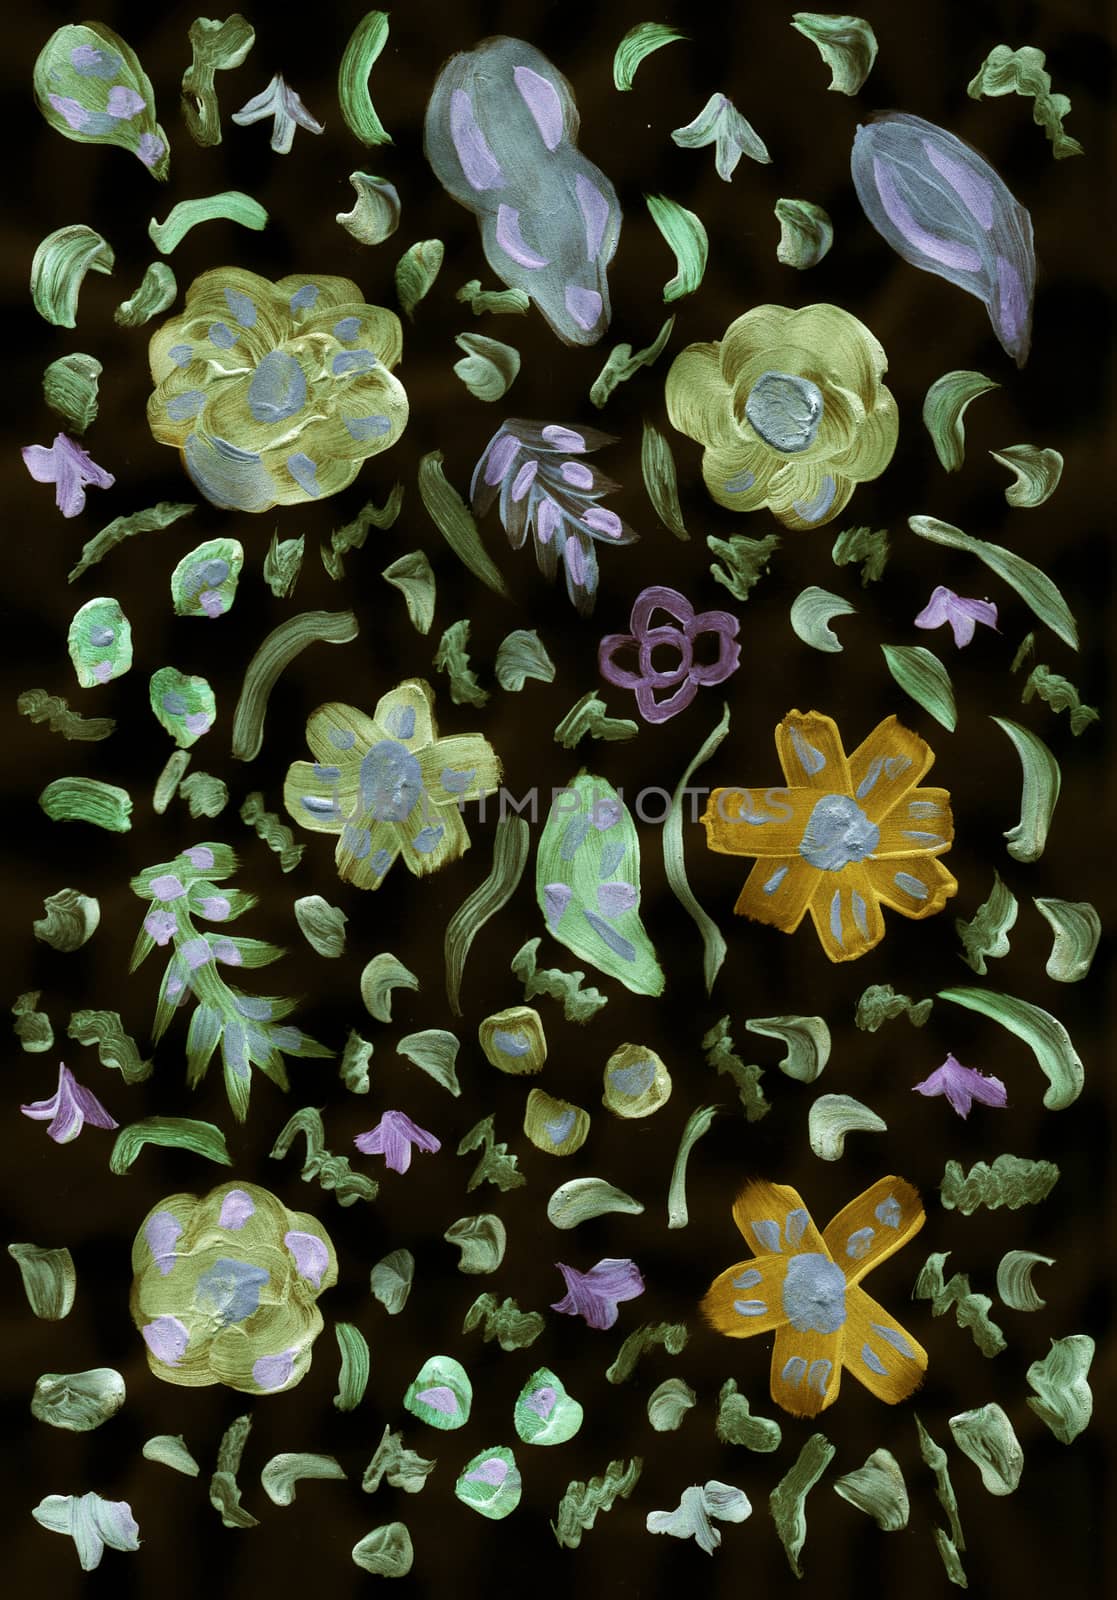 Blue, purple and gold leaf hand painted floral illustration on black background.Flower decoration design for card, backdrop, covers, wallpaper